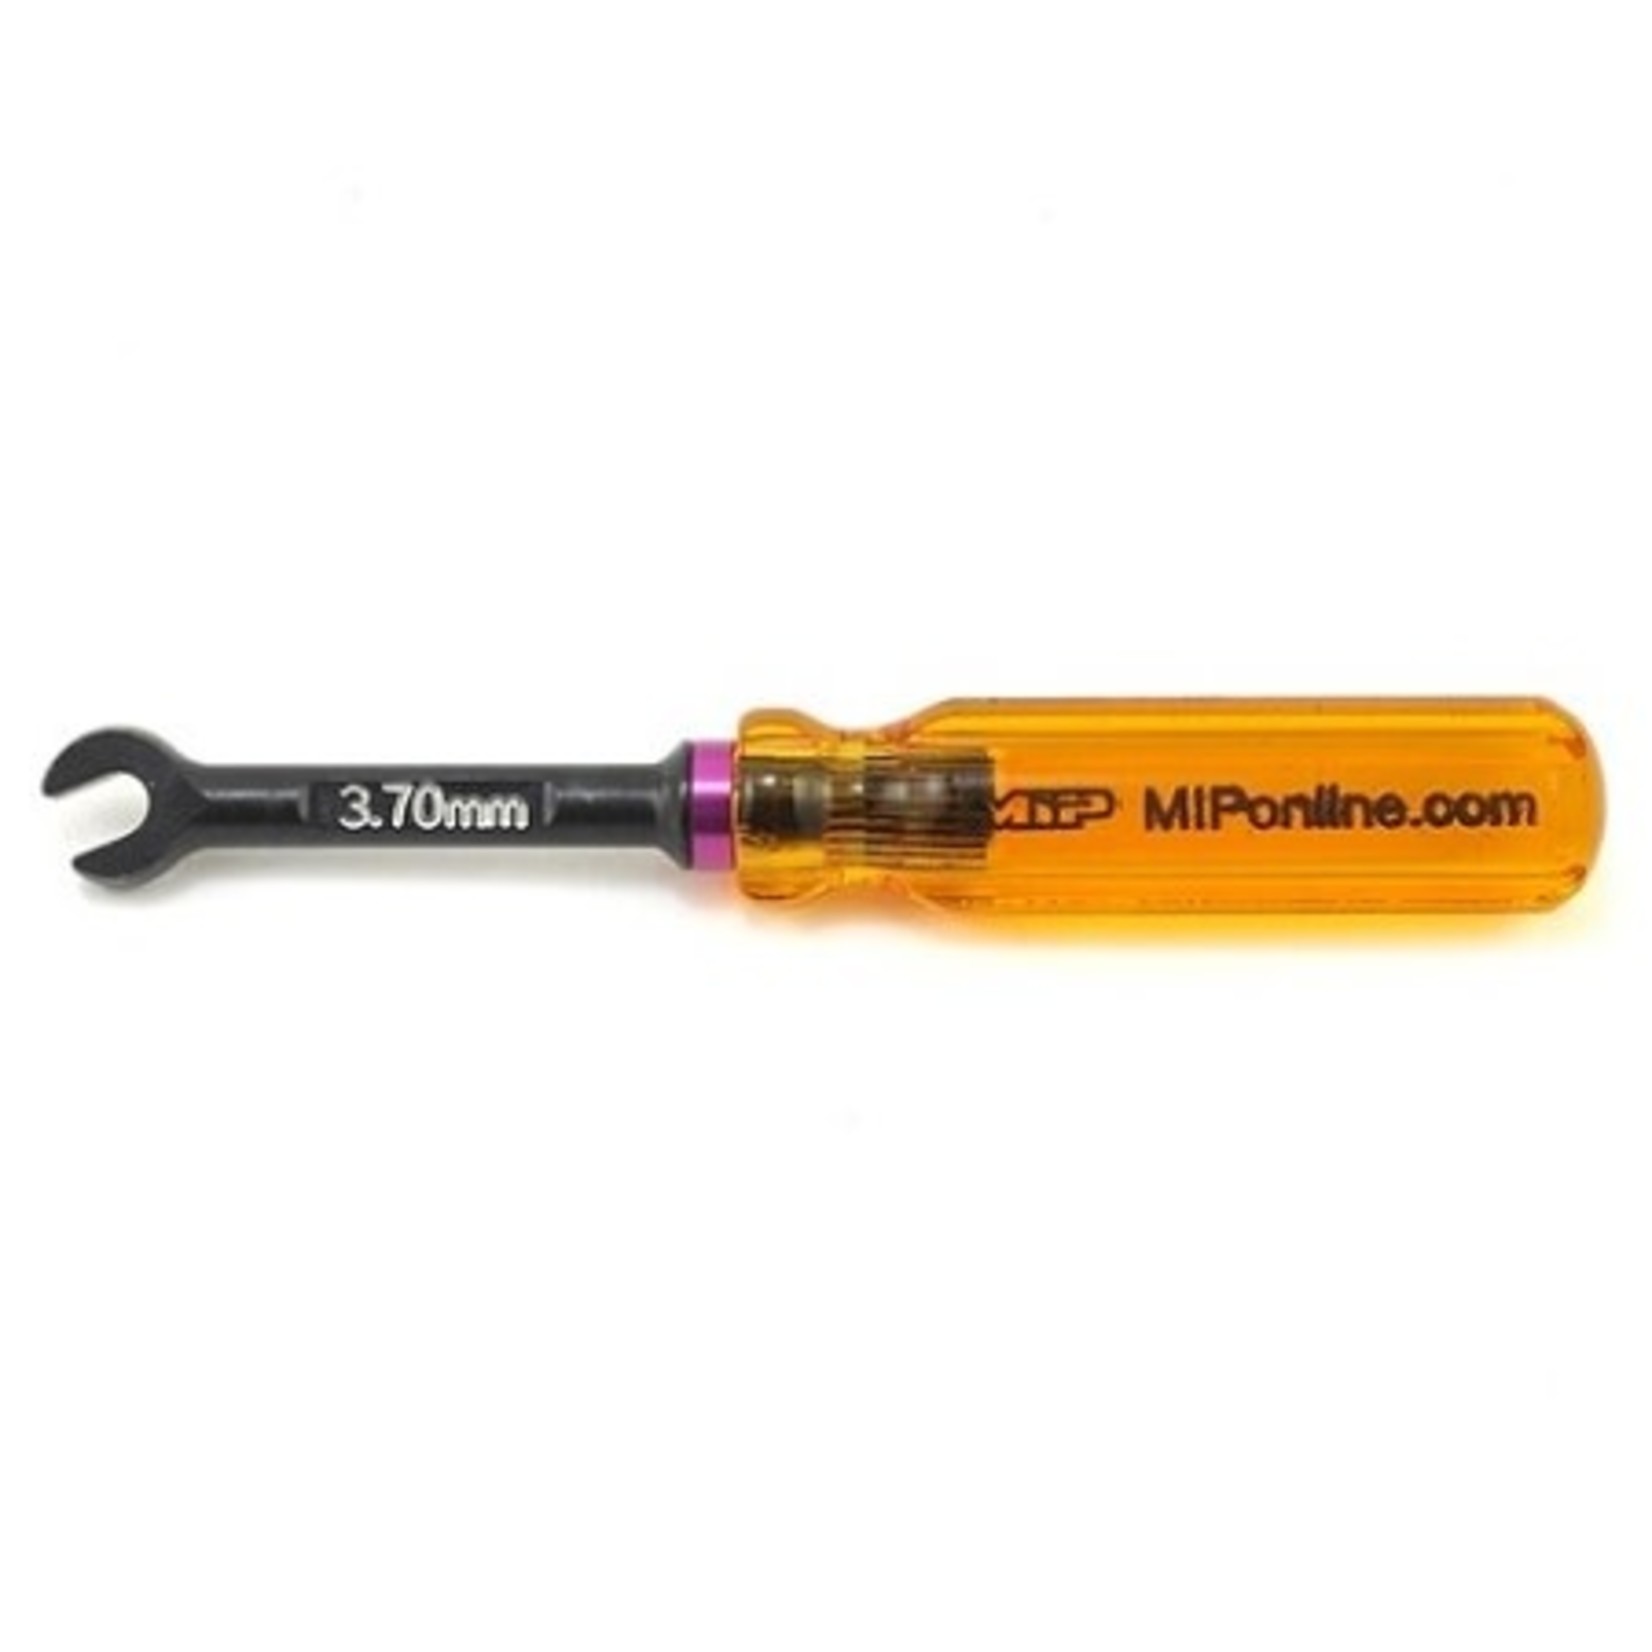 MIP MIP9720 MIP 1/10 Turnbuckle Wrench 3.70mm (Lunsford/ProTek/JConcepts)